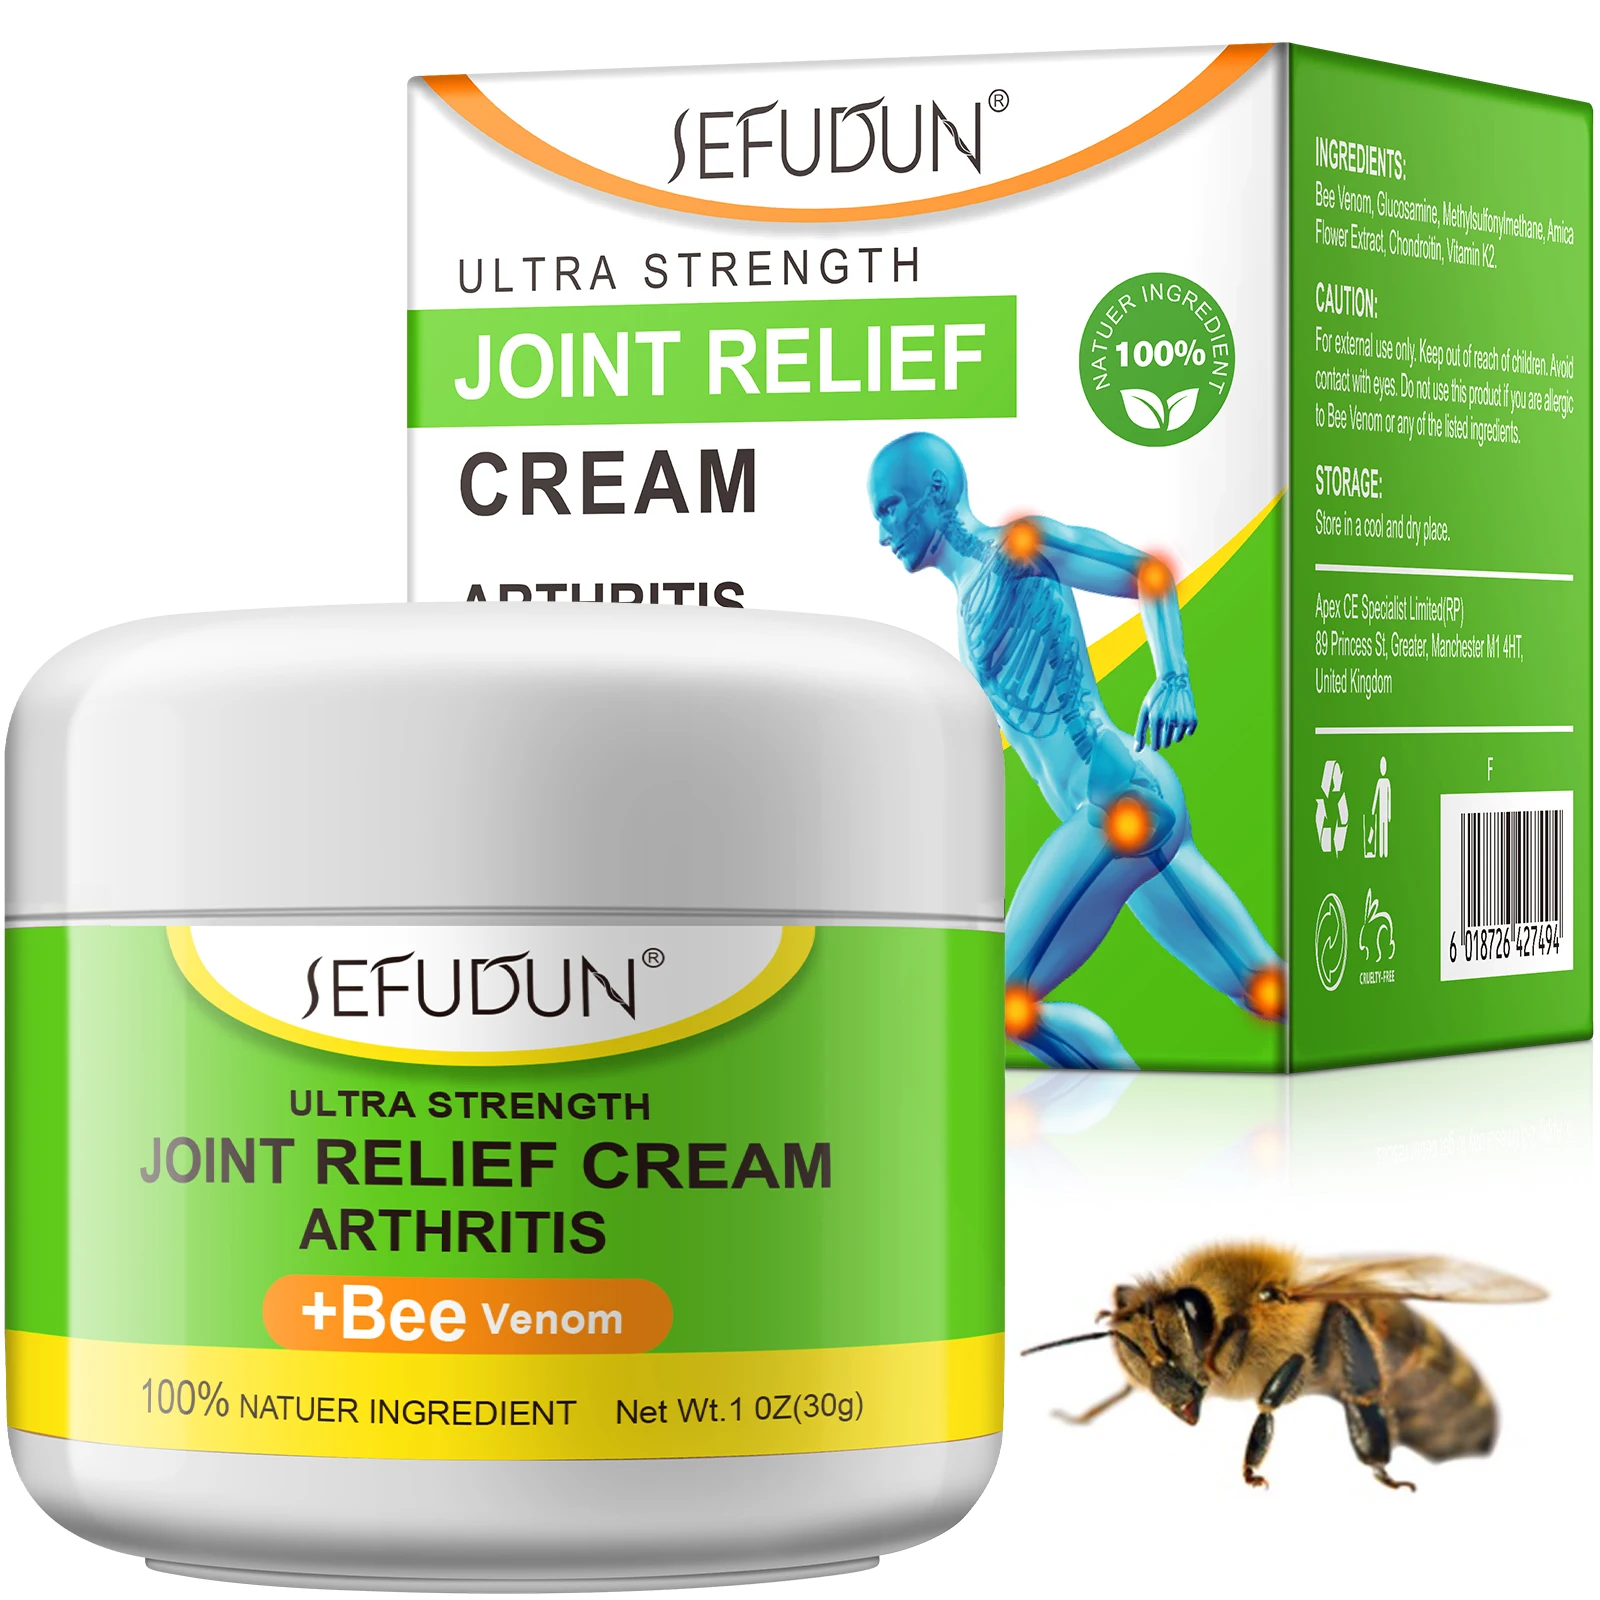 sefudun natural wholesale vitamin k2 bee venom knee shoulder bunion pain relief massage creamback joint pain relief cream